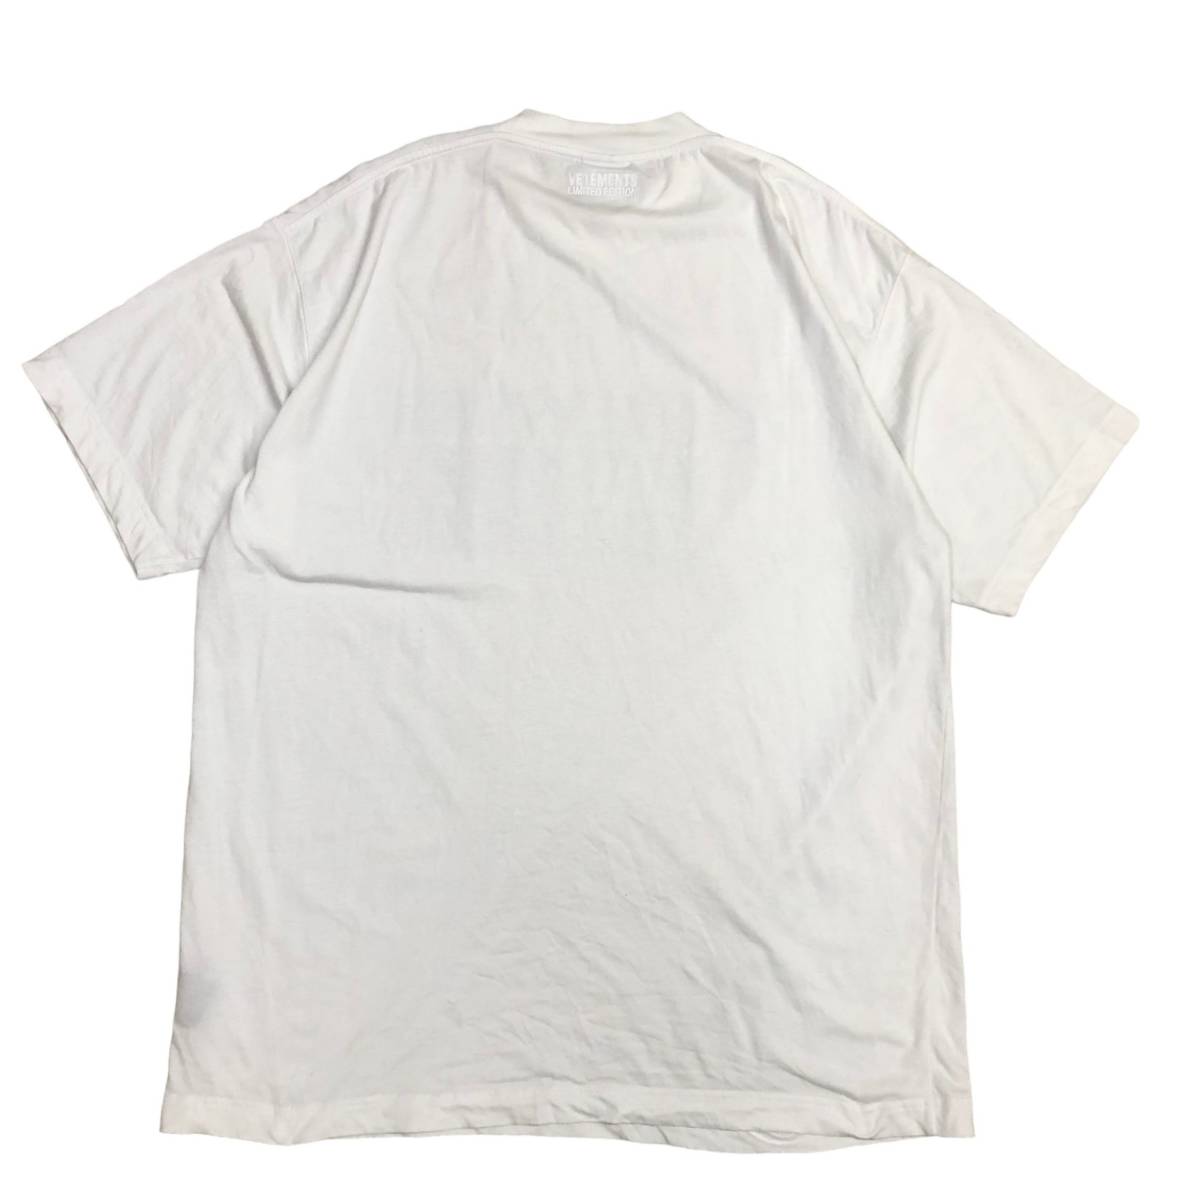 VETEMENTS ヴェトモン BIG LOGO LIMITED EDITION ビッグロゴ 半袖Tシャツ ホワイト UE52TR160W サイズS 店舗受取可_画像2